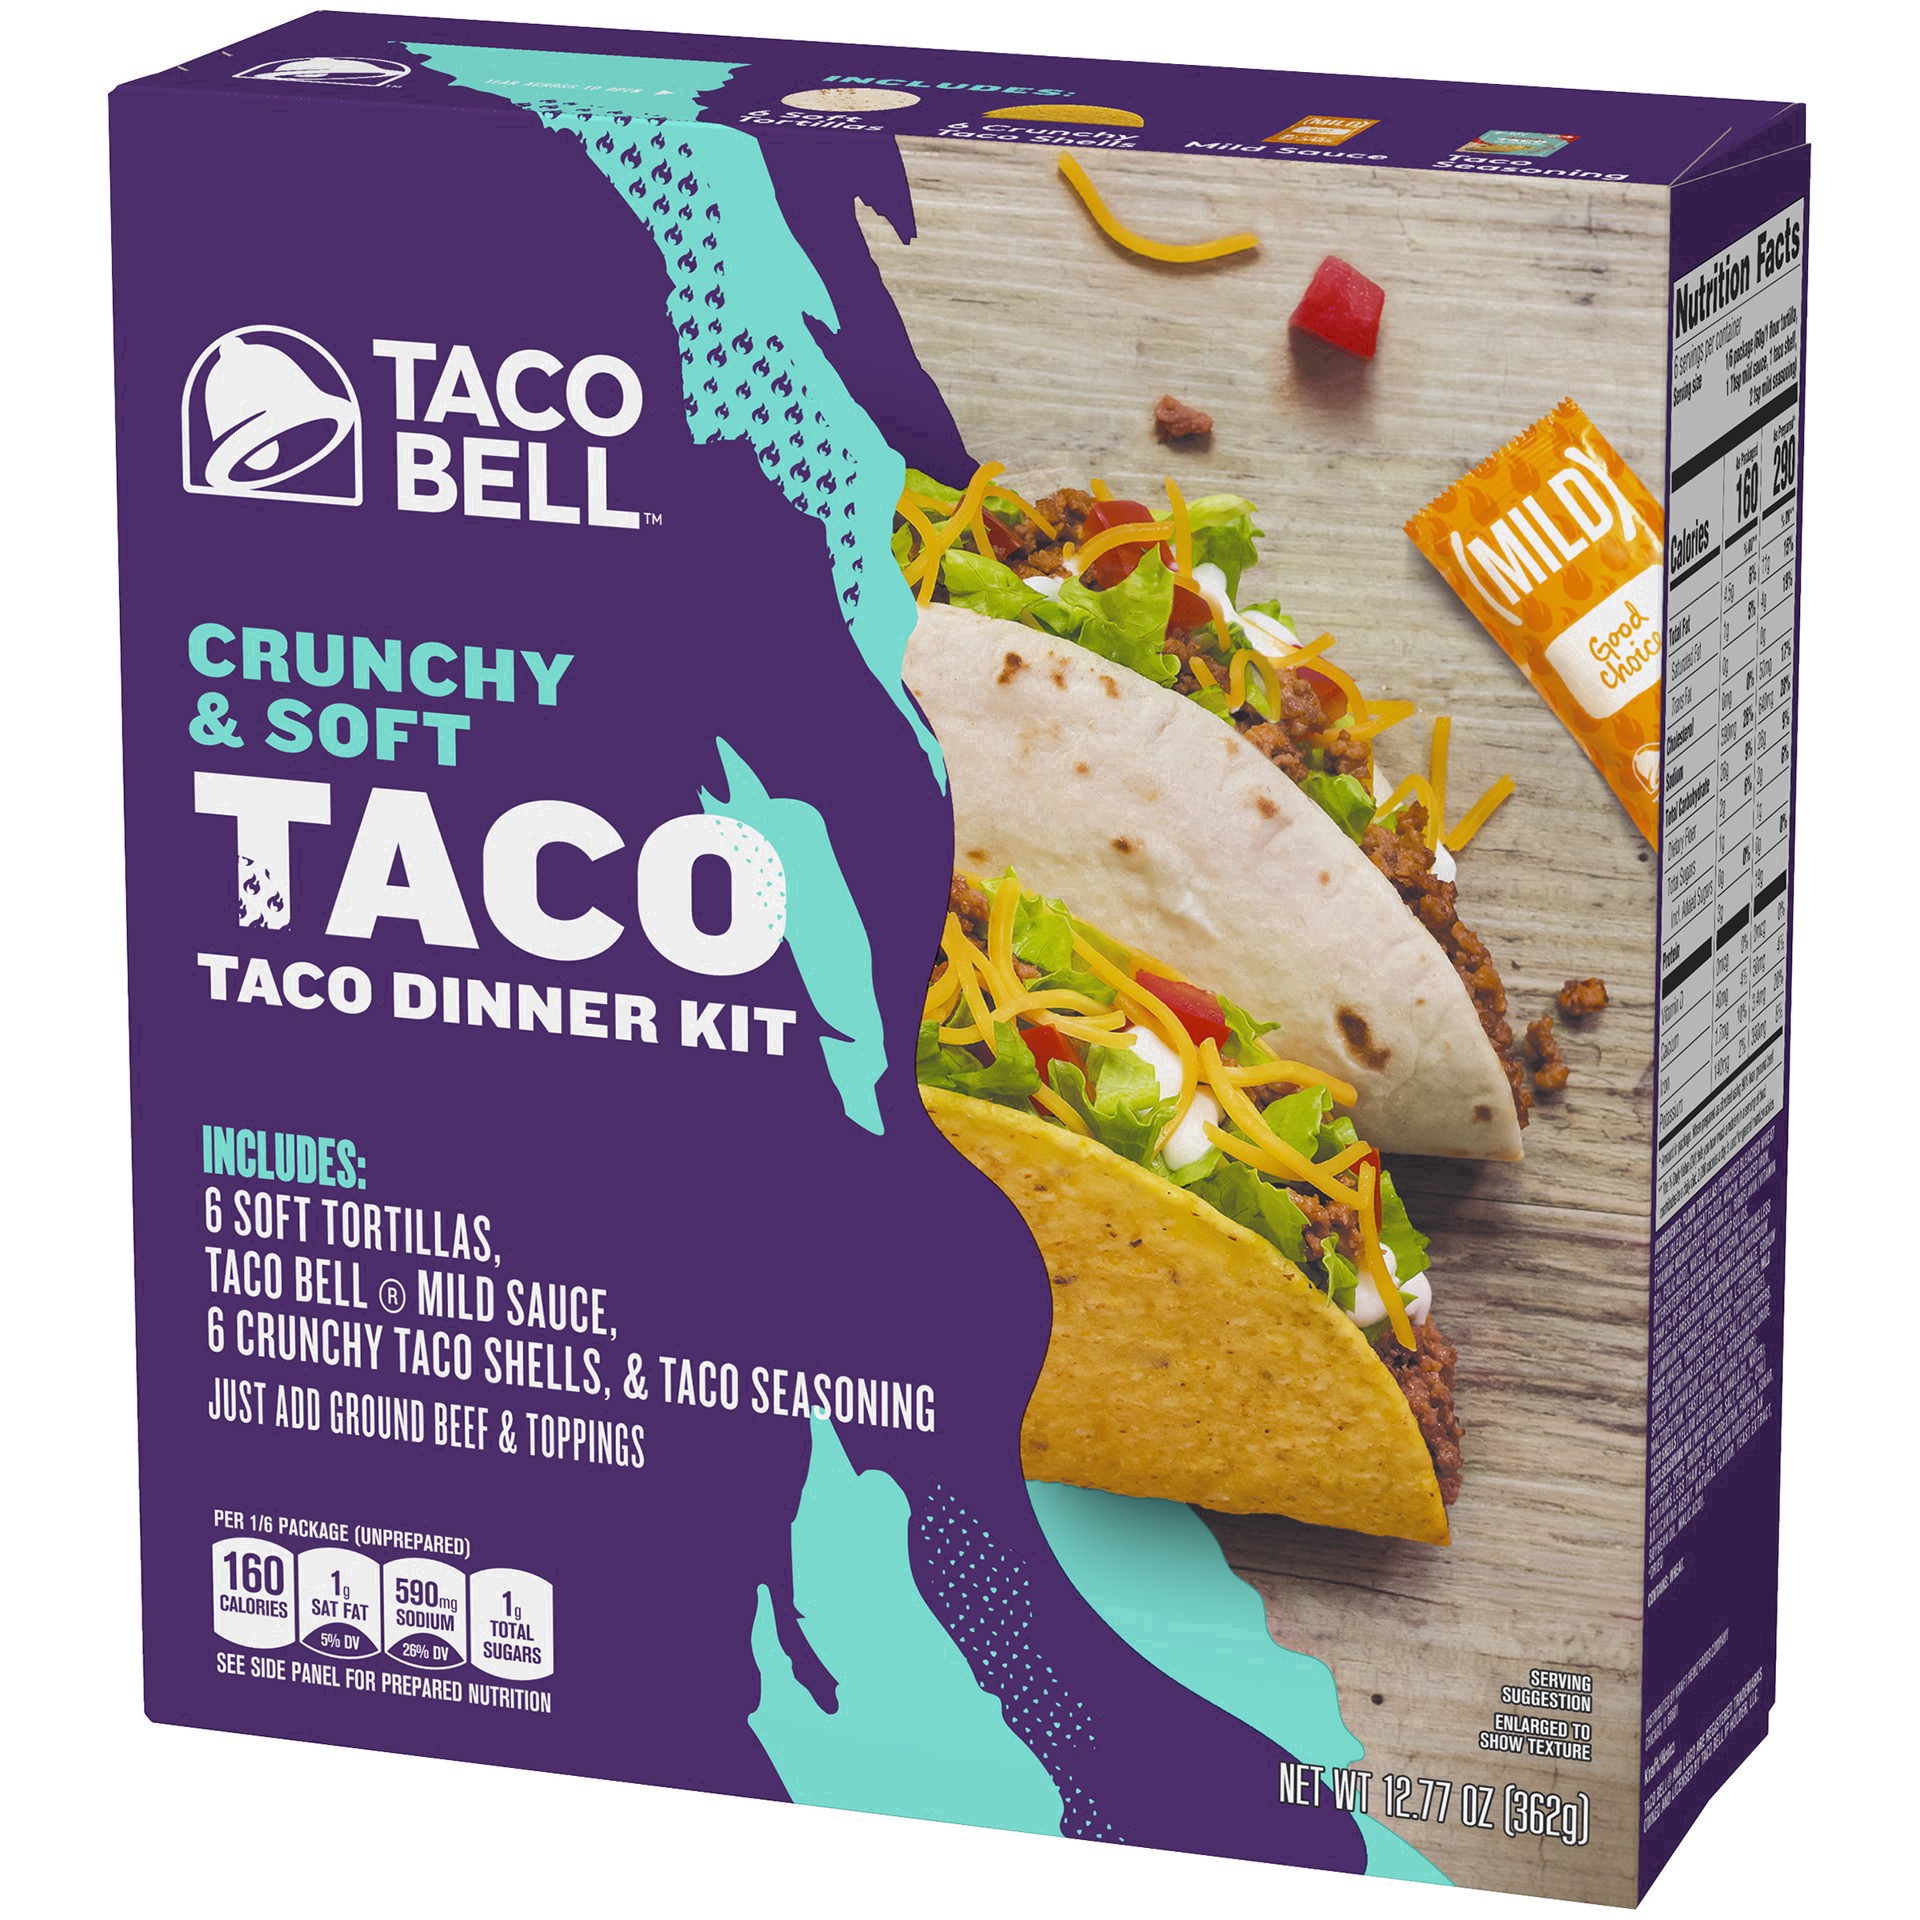 slide 39 of 101, Taco Bell Crunchy & Soft Taco Cravings Kit with 6 Soft Tortillas, 6 Crunchy Taco Shells, Taco Bell Mild Sauce & Seasoning, 12.77 oz Box, 1 ct